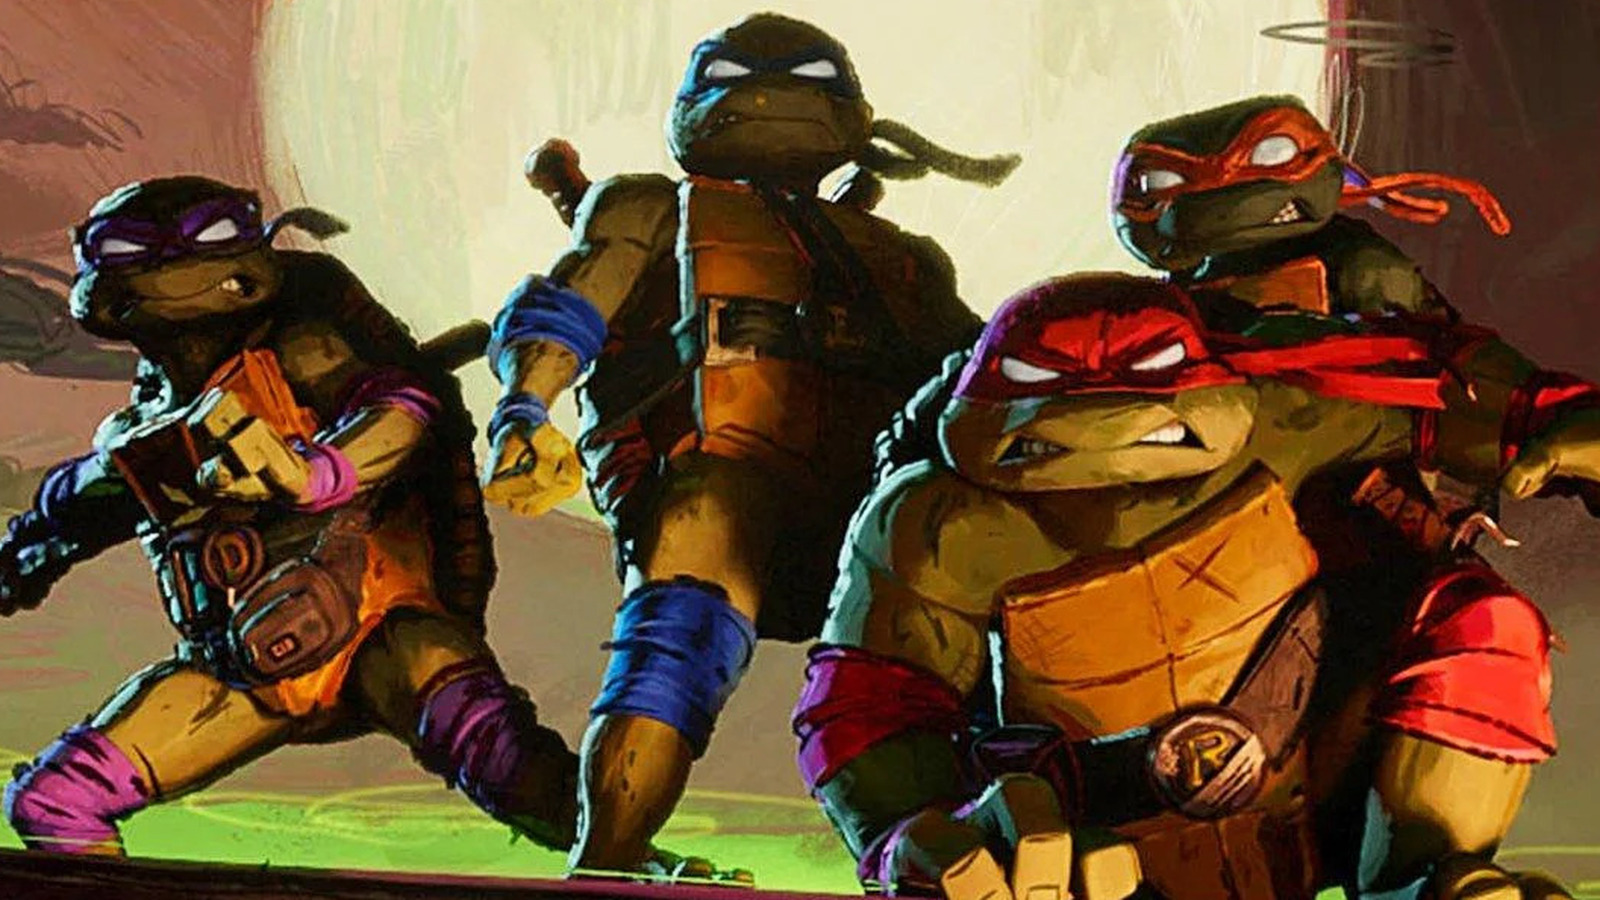 TMNT: Mutant Mayhem Video Shows the Origins of the Turtles